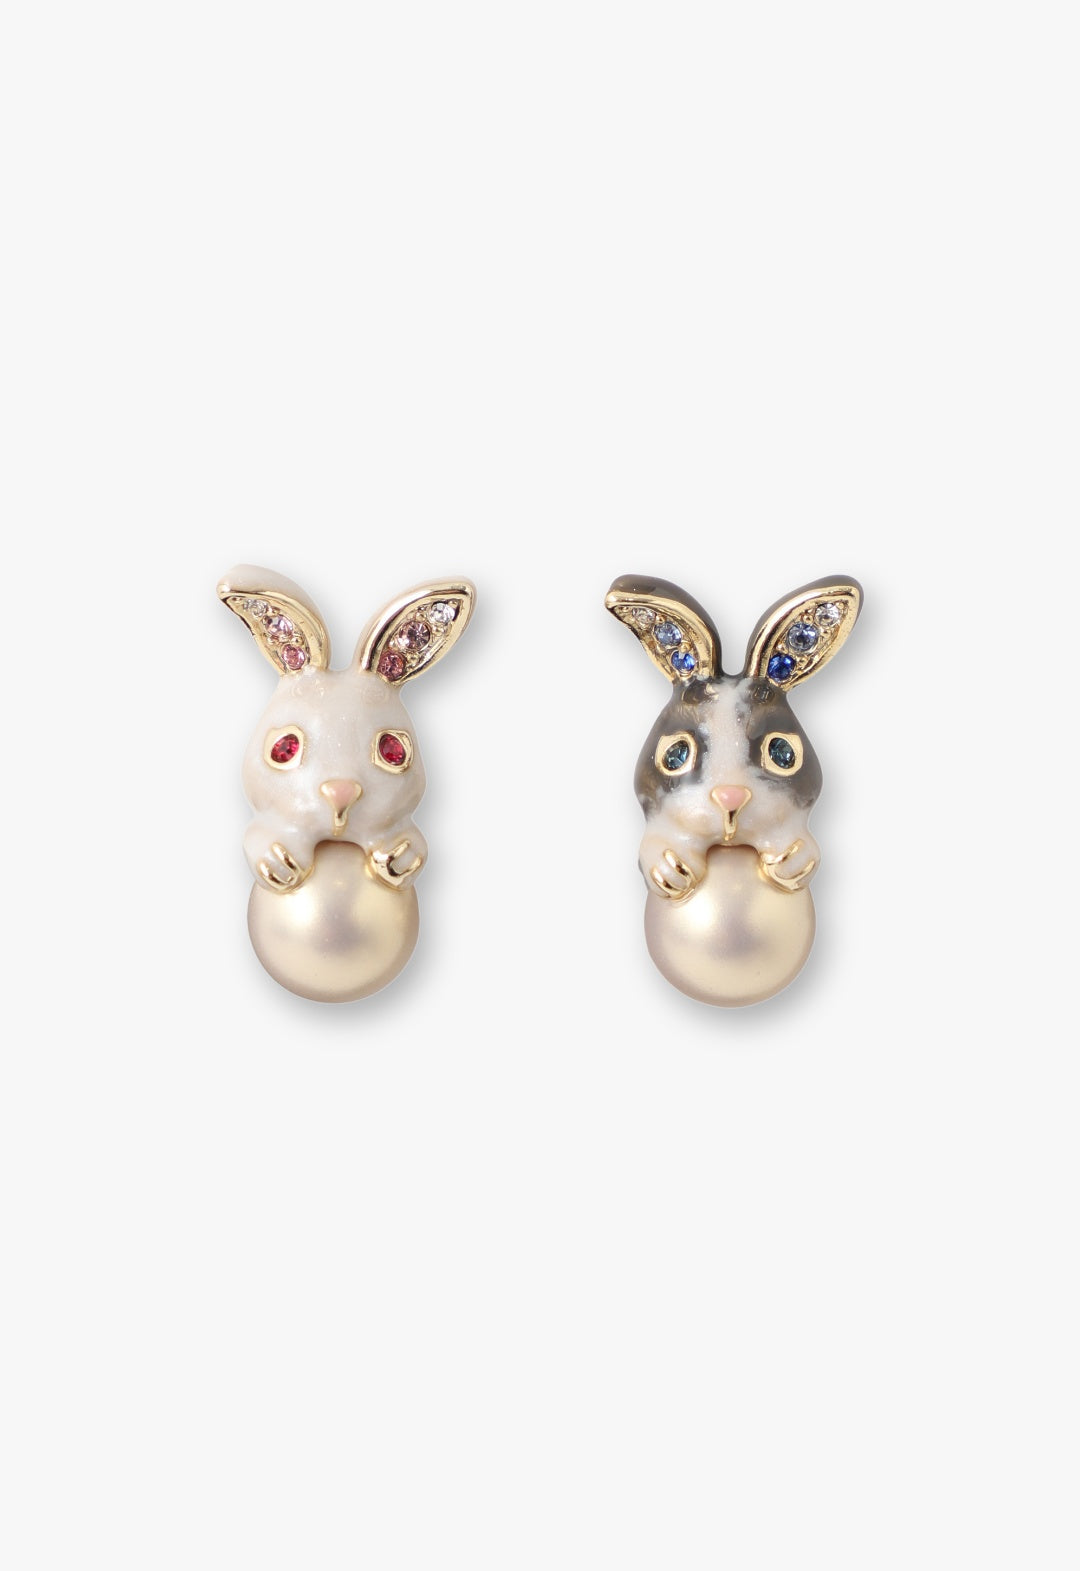 Rabbit motif earrings – アナ スイ ジャパン 公式ウェブストア